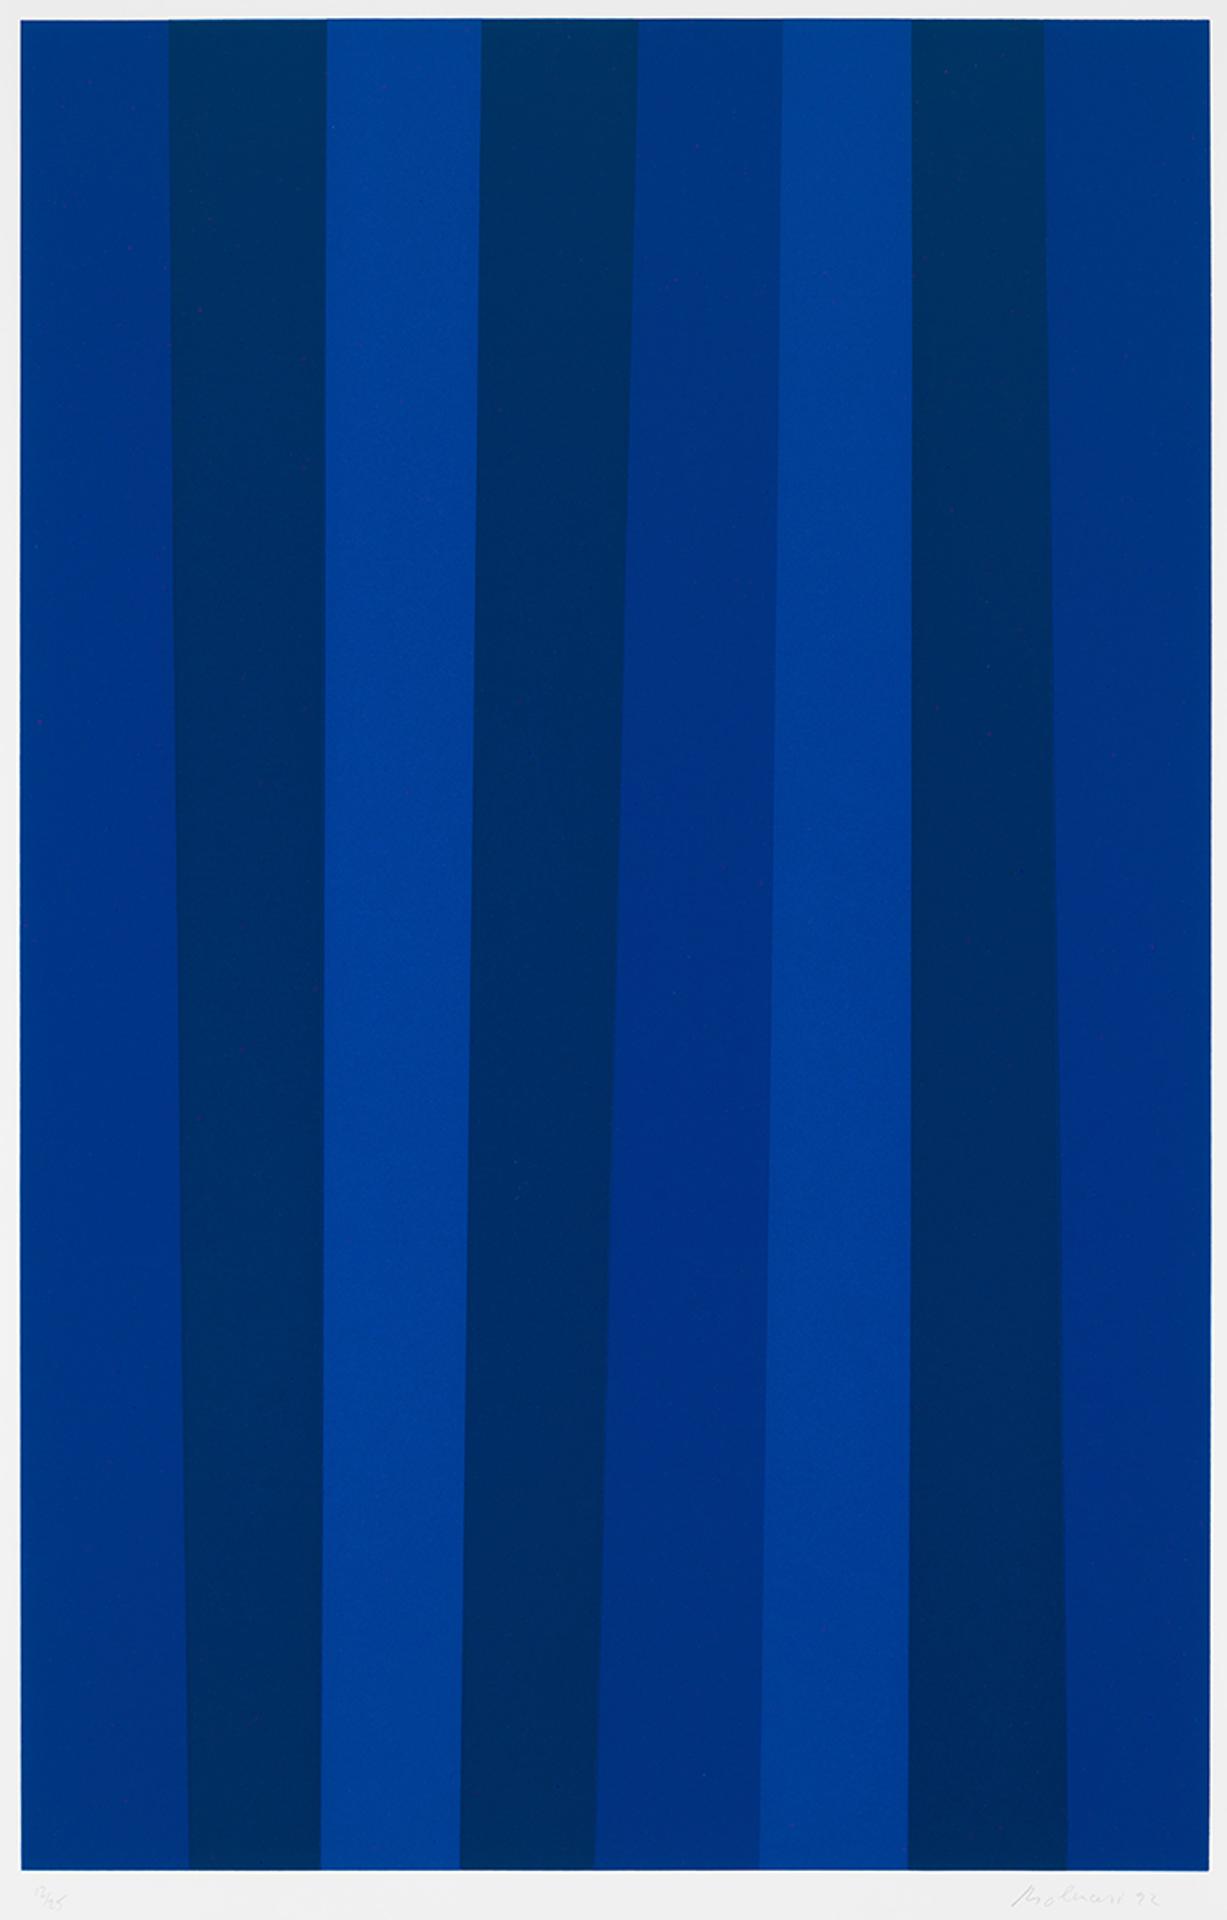 Guido Molinari (1933-2004) - Blue Quantifier #25